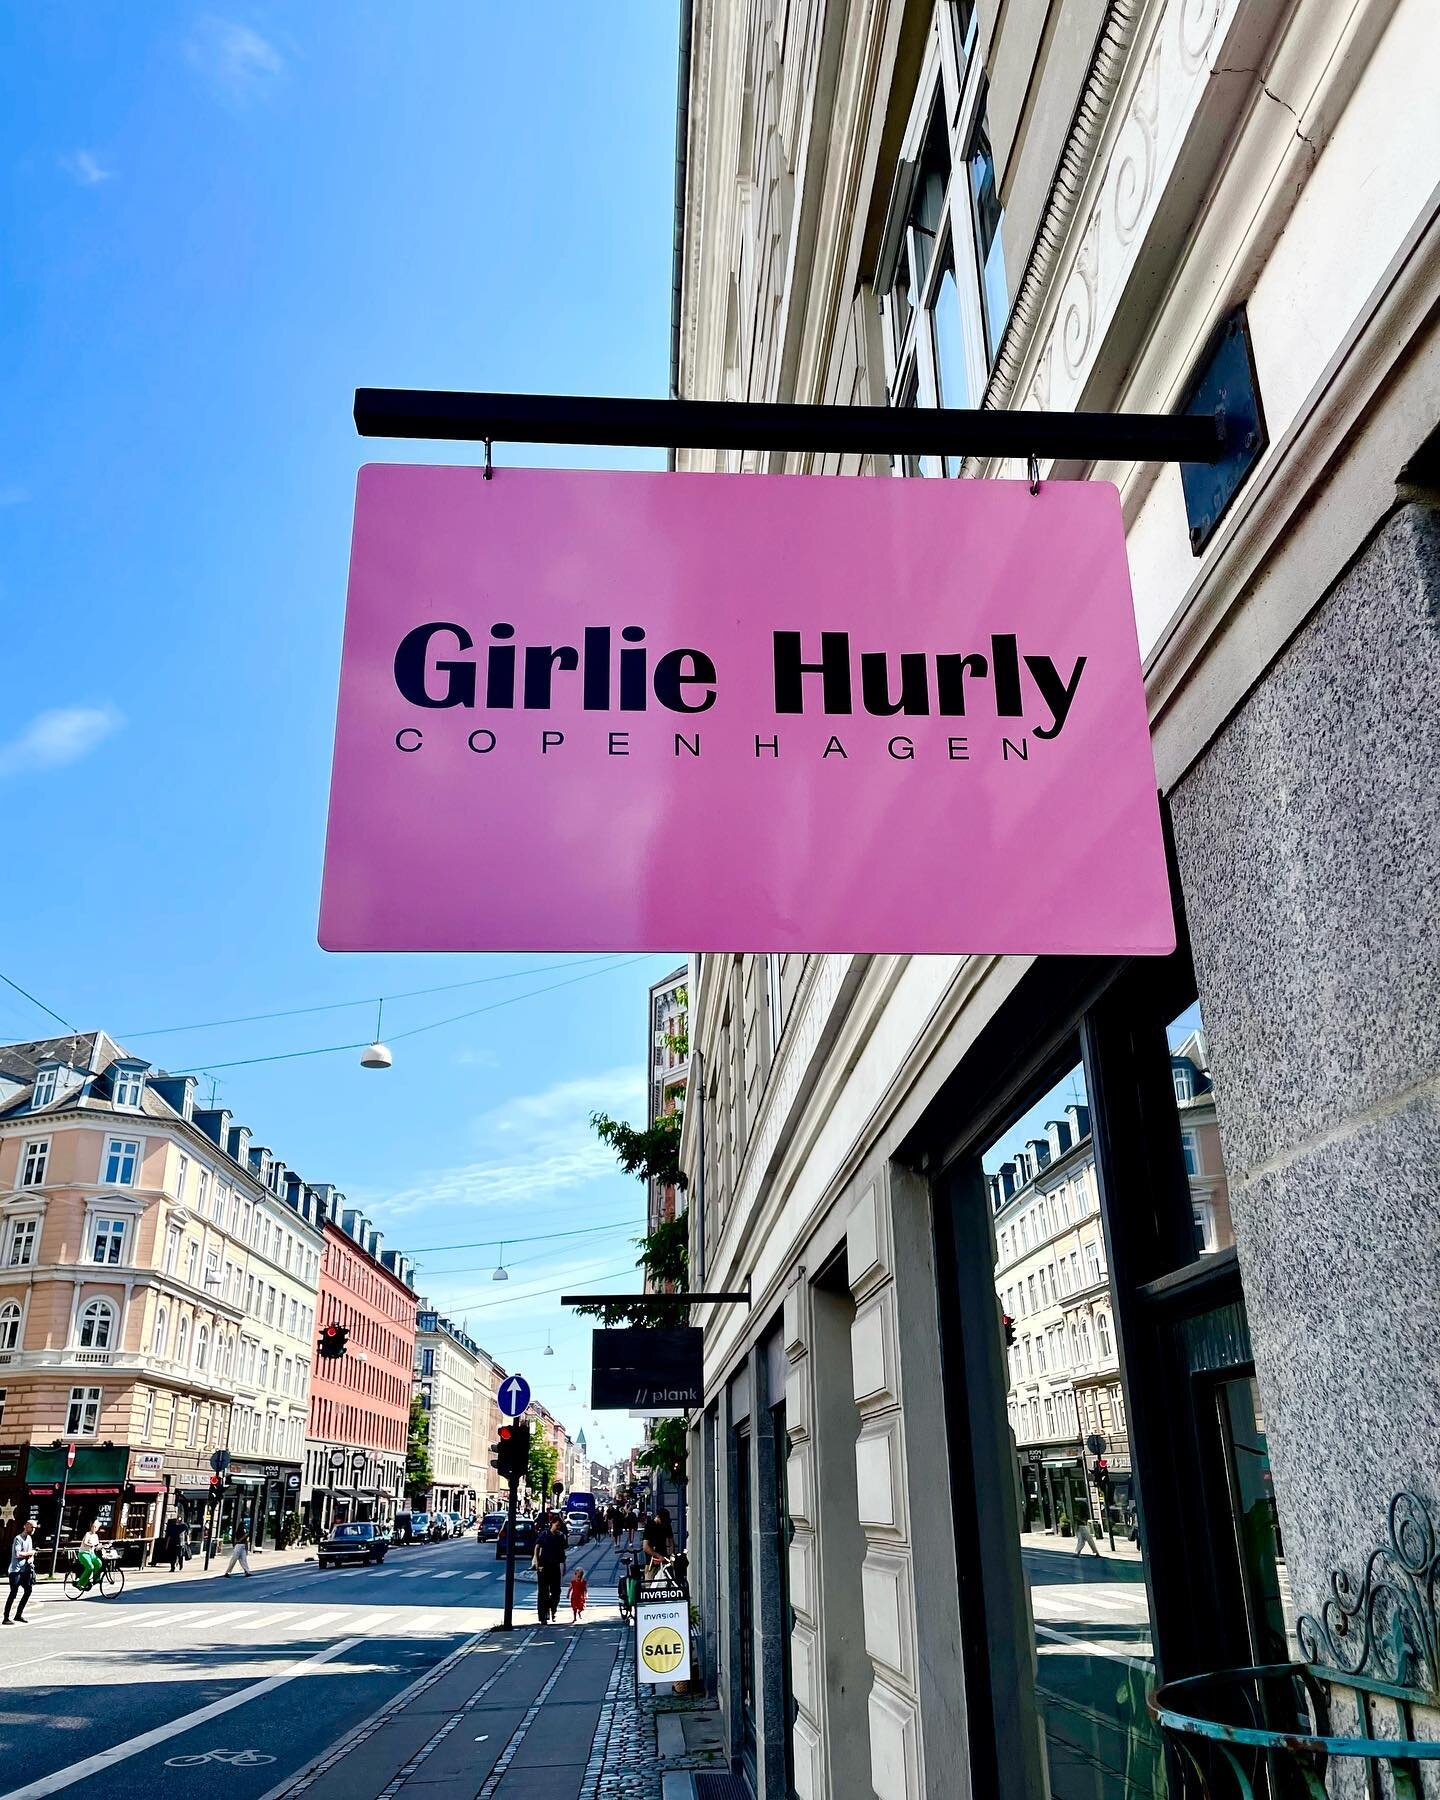 Girlie Hurly er en institution p&aring; Vesterbro. I morgen har Tine haft sin lille biks &aring;ben i 25 &aring;r. Det fucking sejt g&aring;et tillykke til Girlie Hurly.
#girliehurly #shopping #jubil&aelig;um #sj&oslash;rlis #girlipower